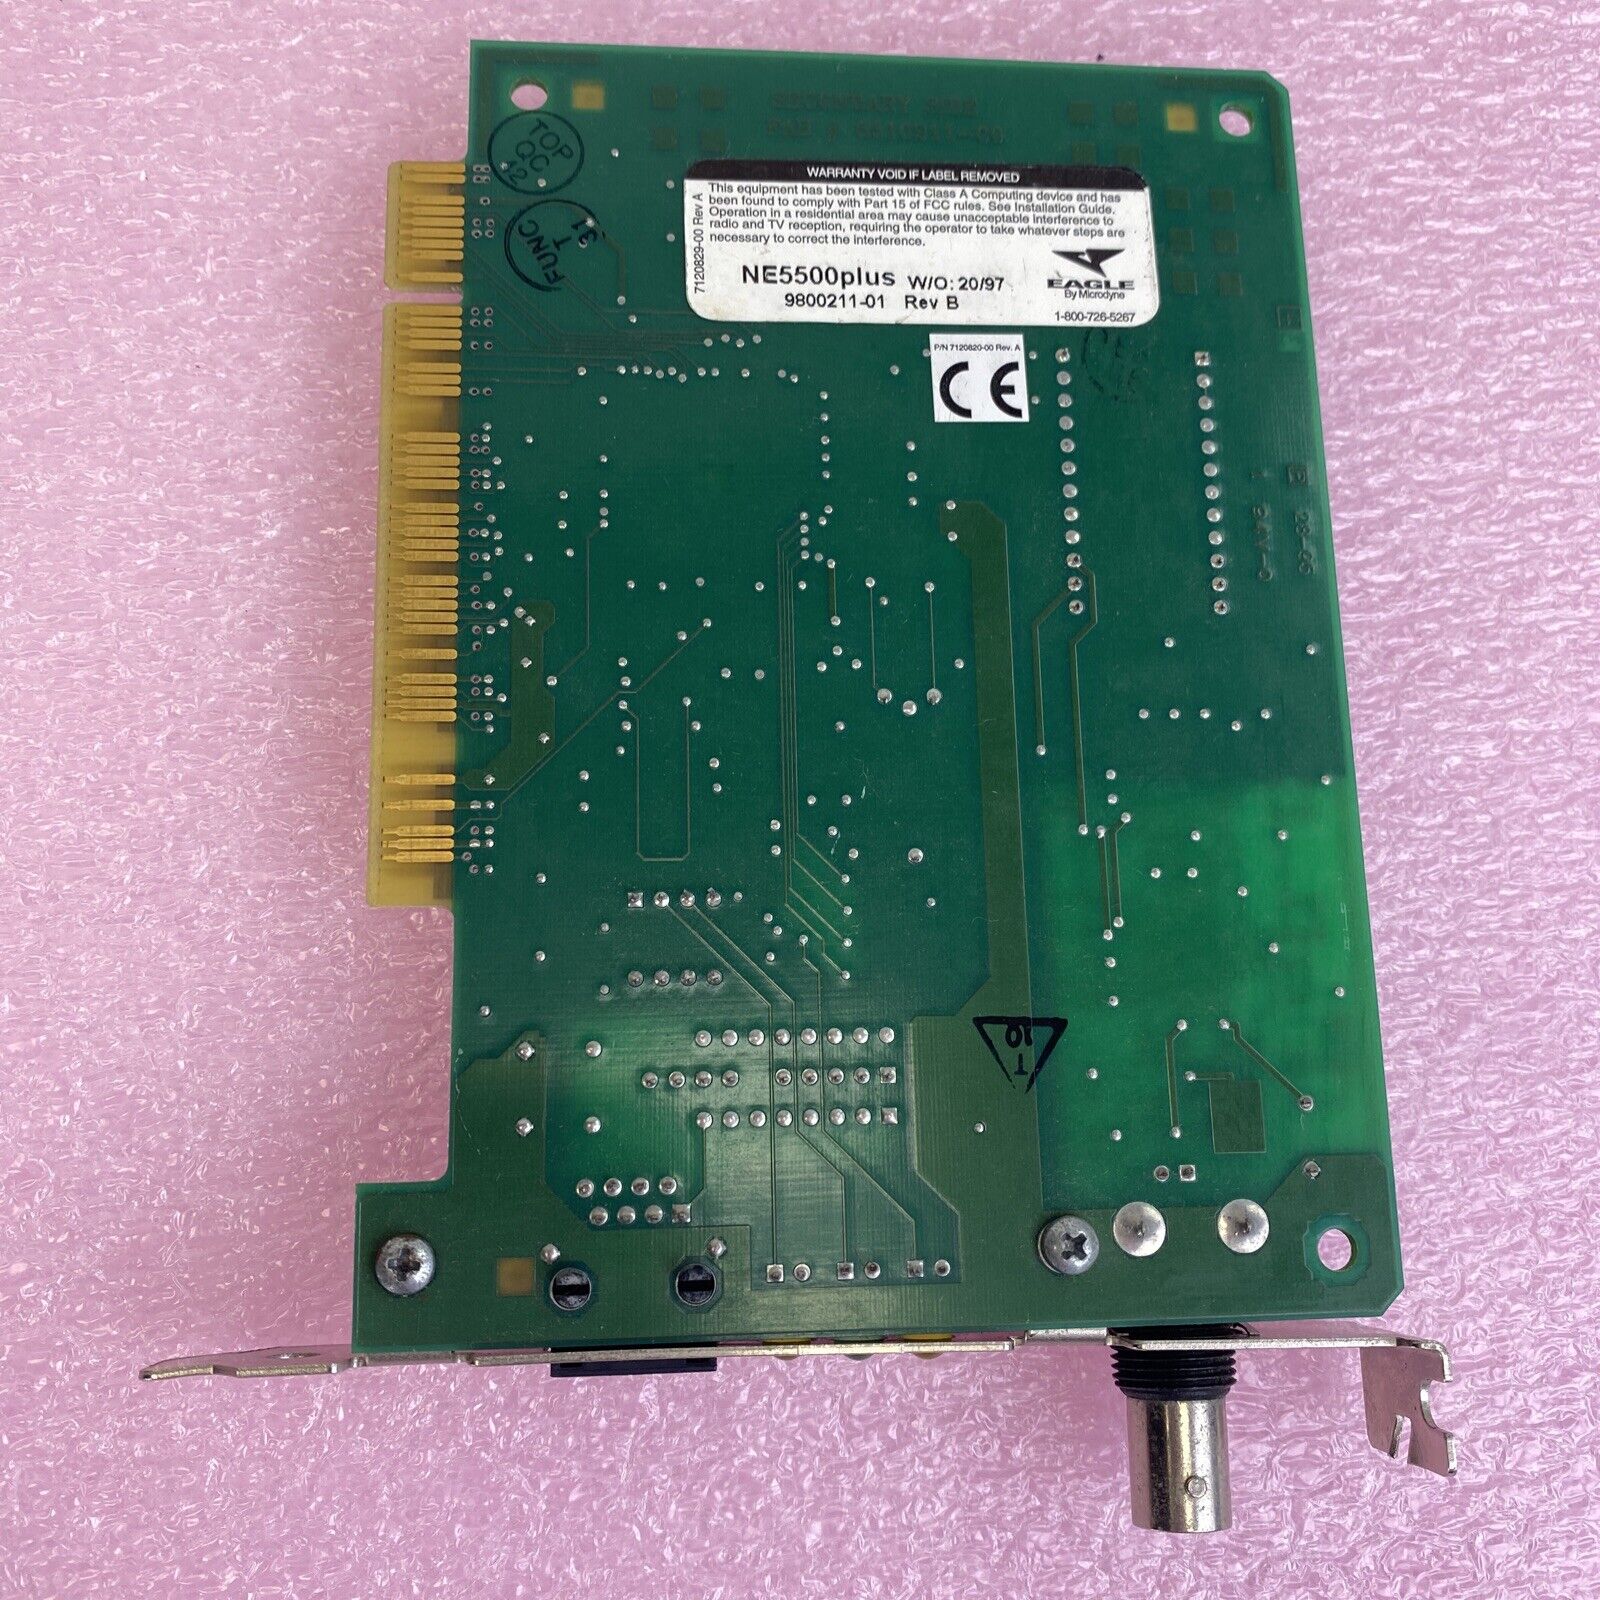 Microdyne NE5500plus RJ45 Coaxial PCI card